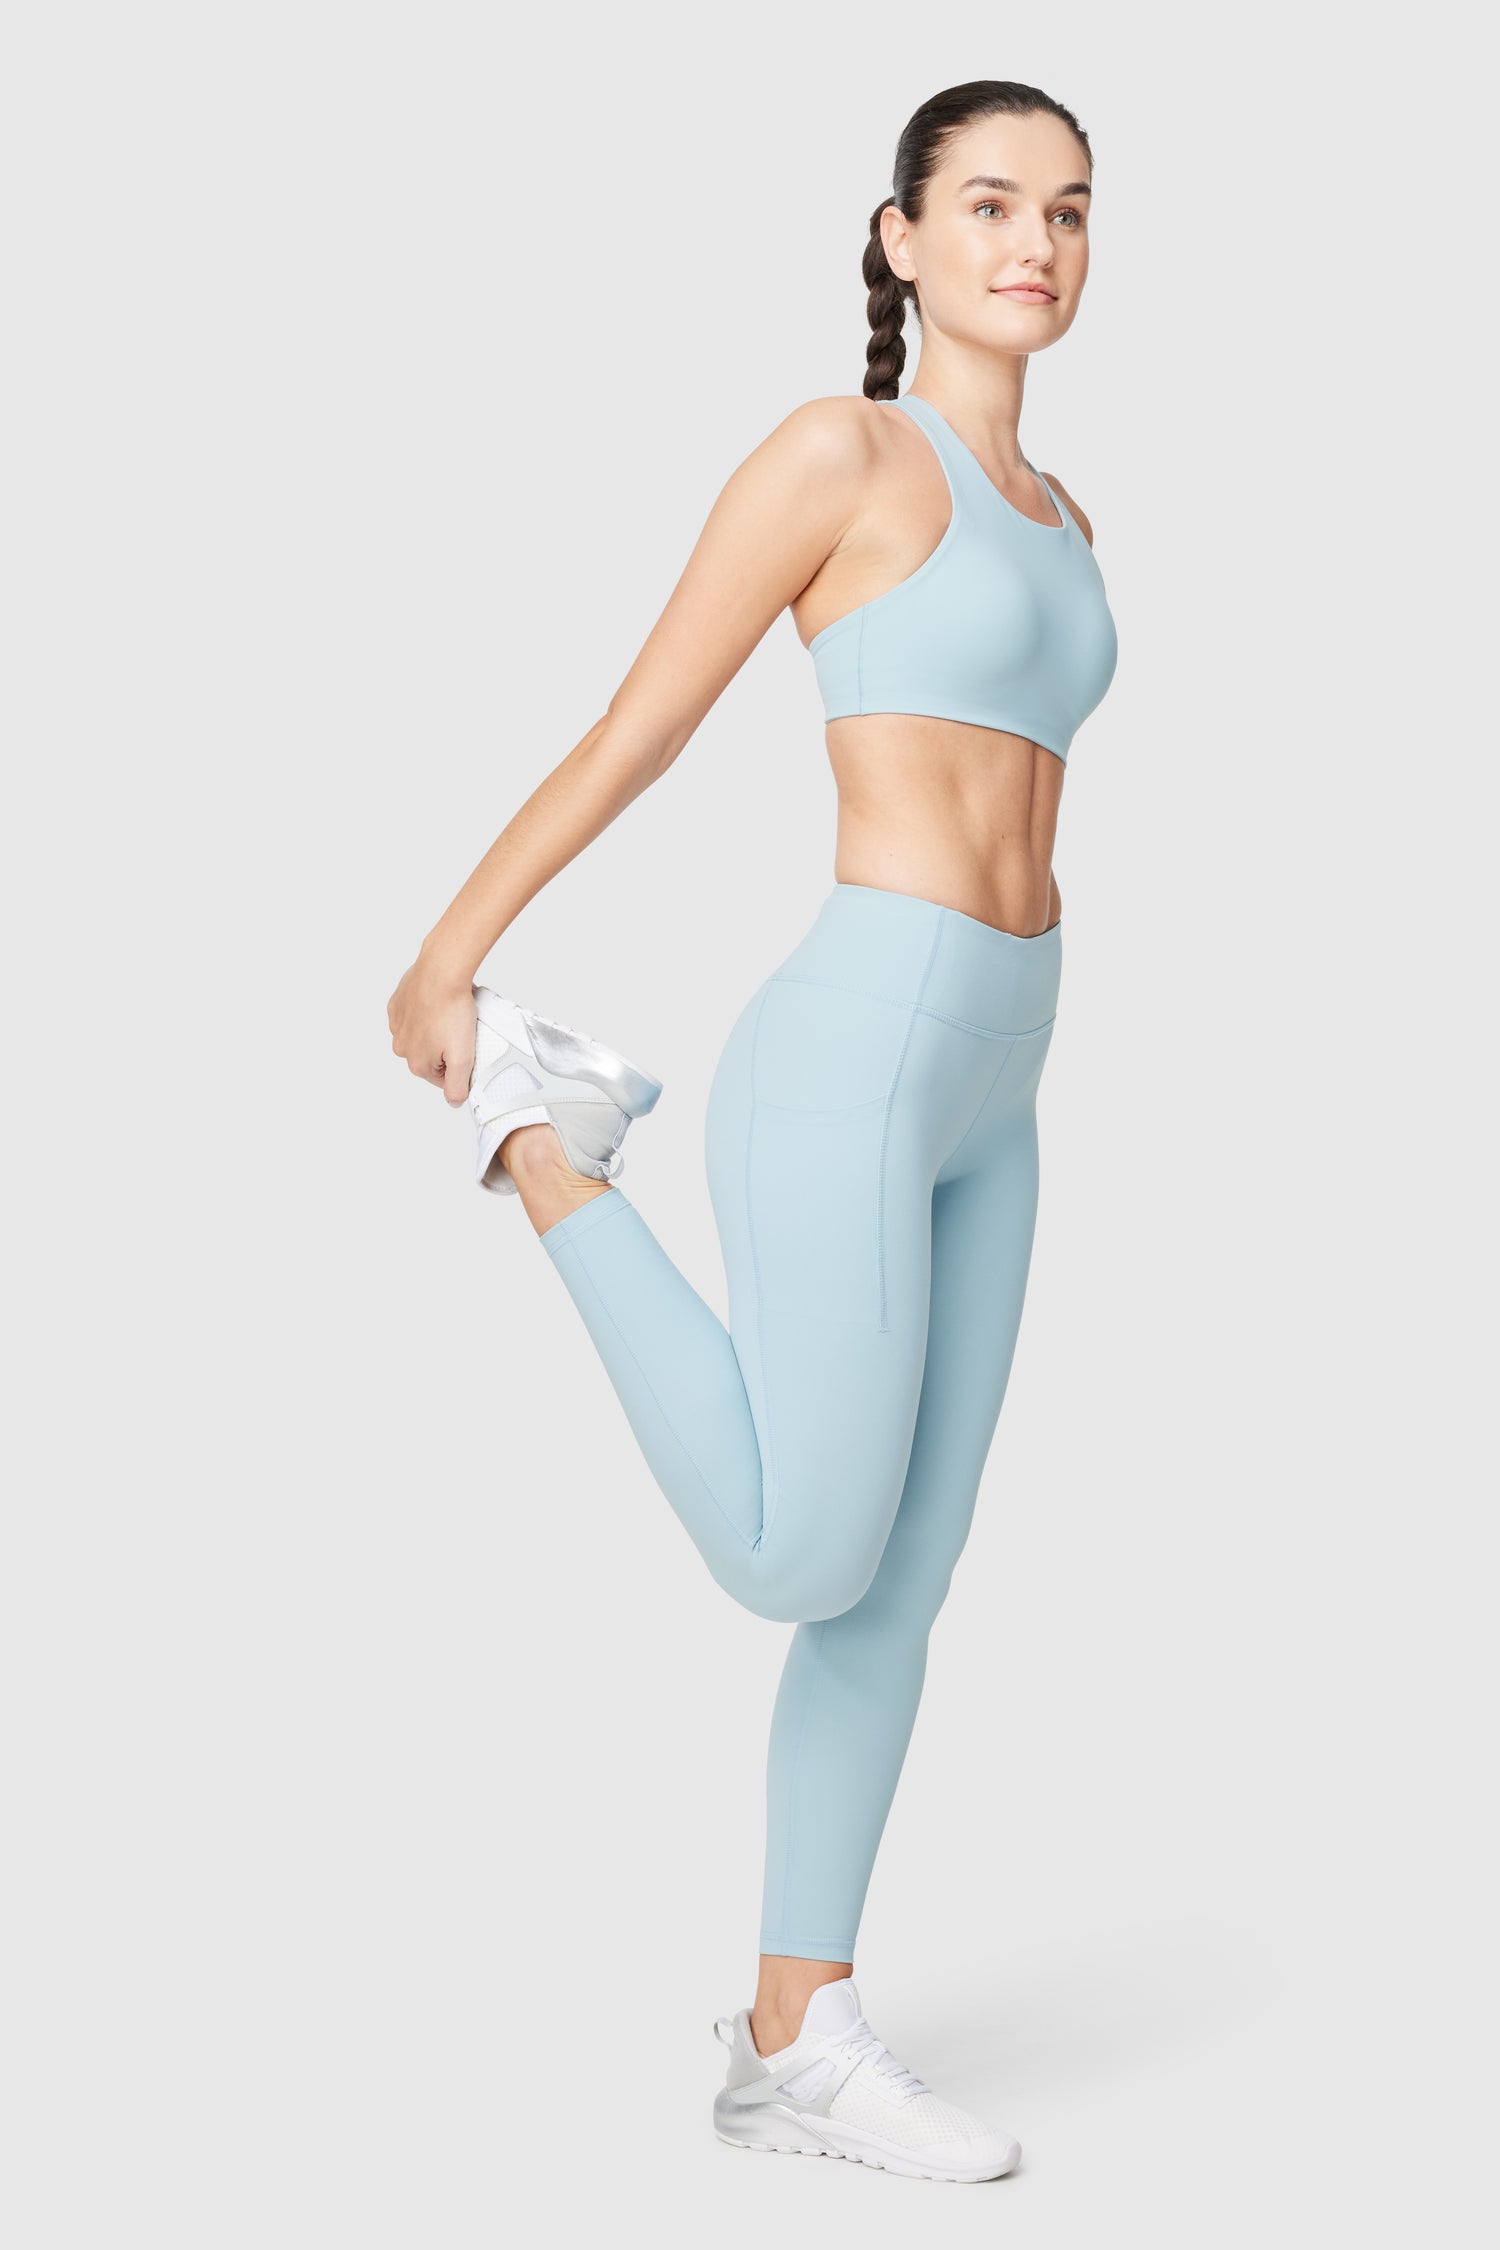 ALING Plus Size Women Sports Bra Stretch Comfy Bra Push Up Active Sports  Bra Removable Pads Gym Yoga Workout Fitness Yoga Bras